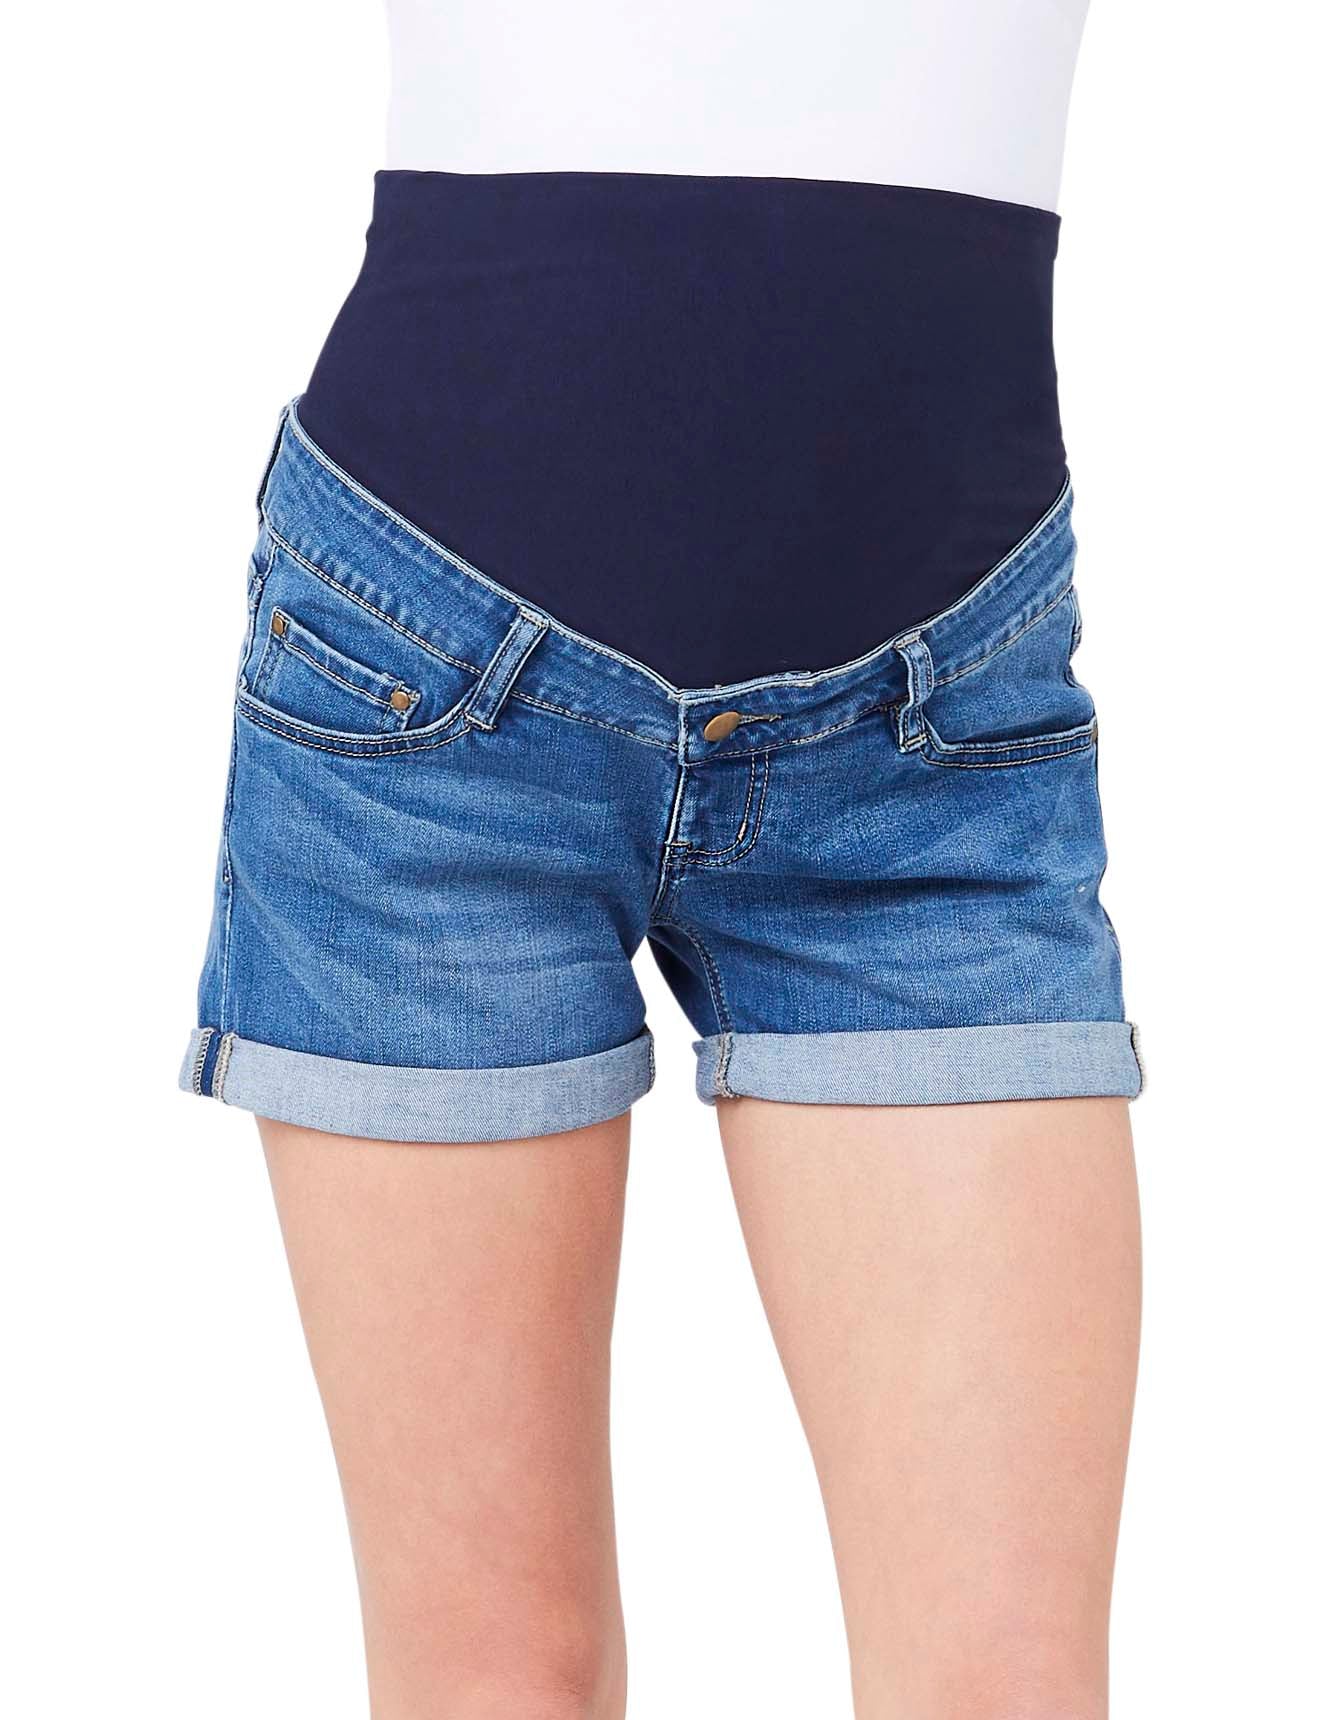 Denim Maternity Shorts - Shop Denim Maternity Shorts Australia Wide